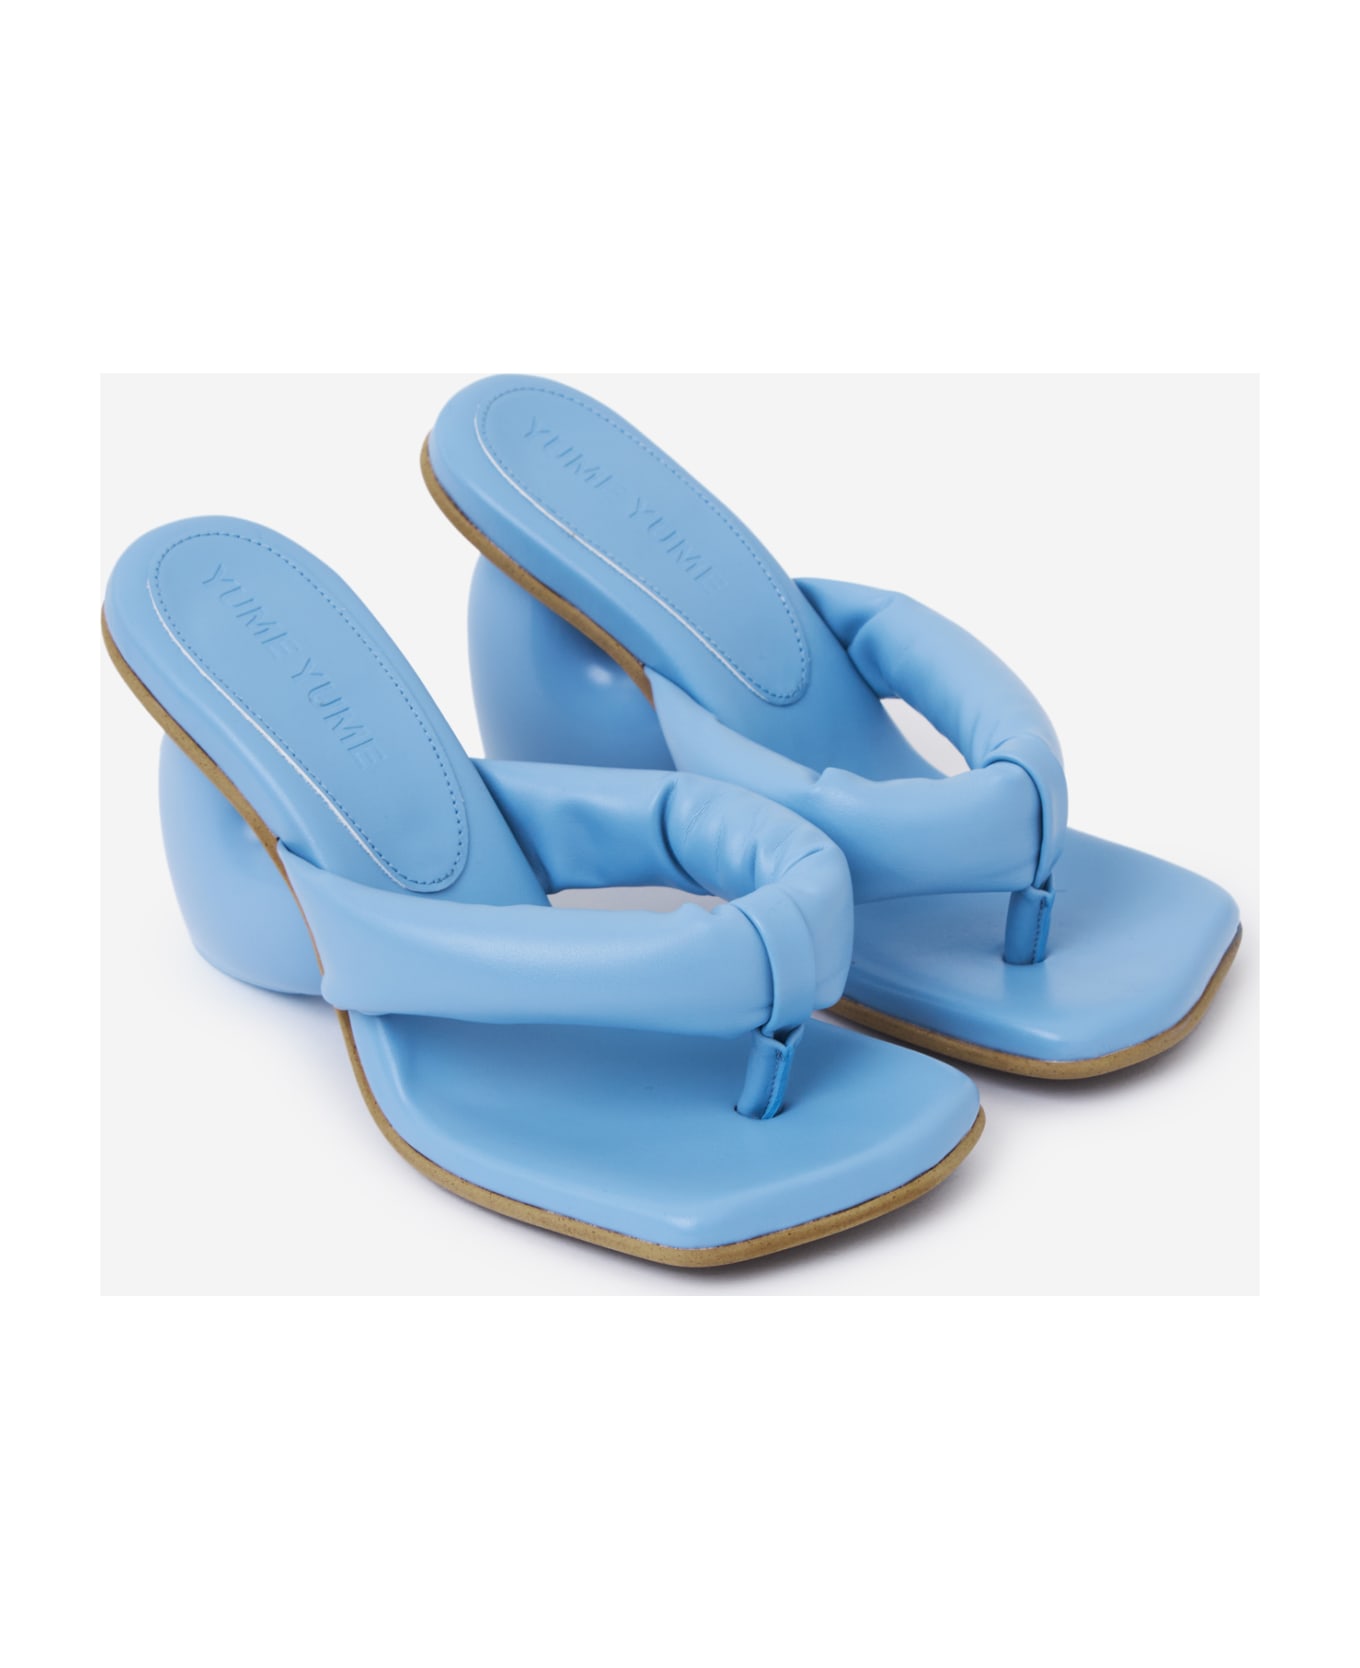 YUME YUME Love Mule Sandals - blue